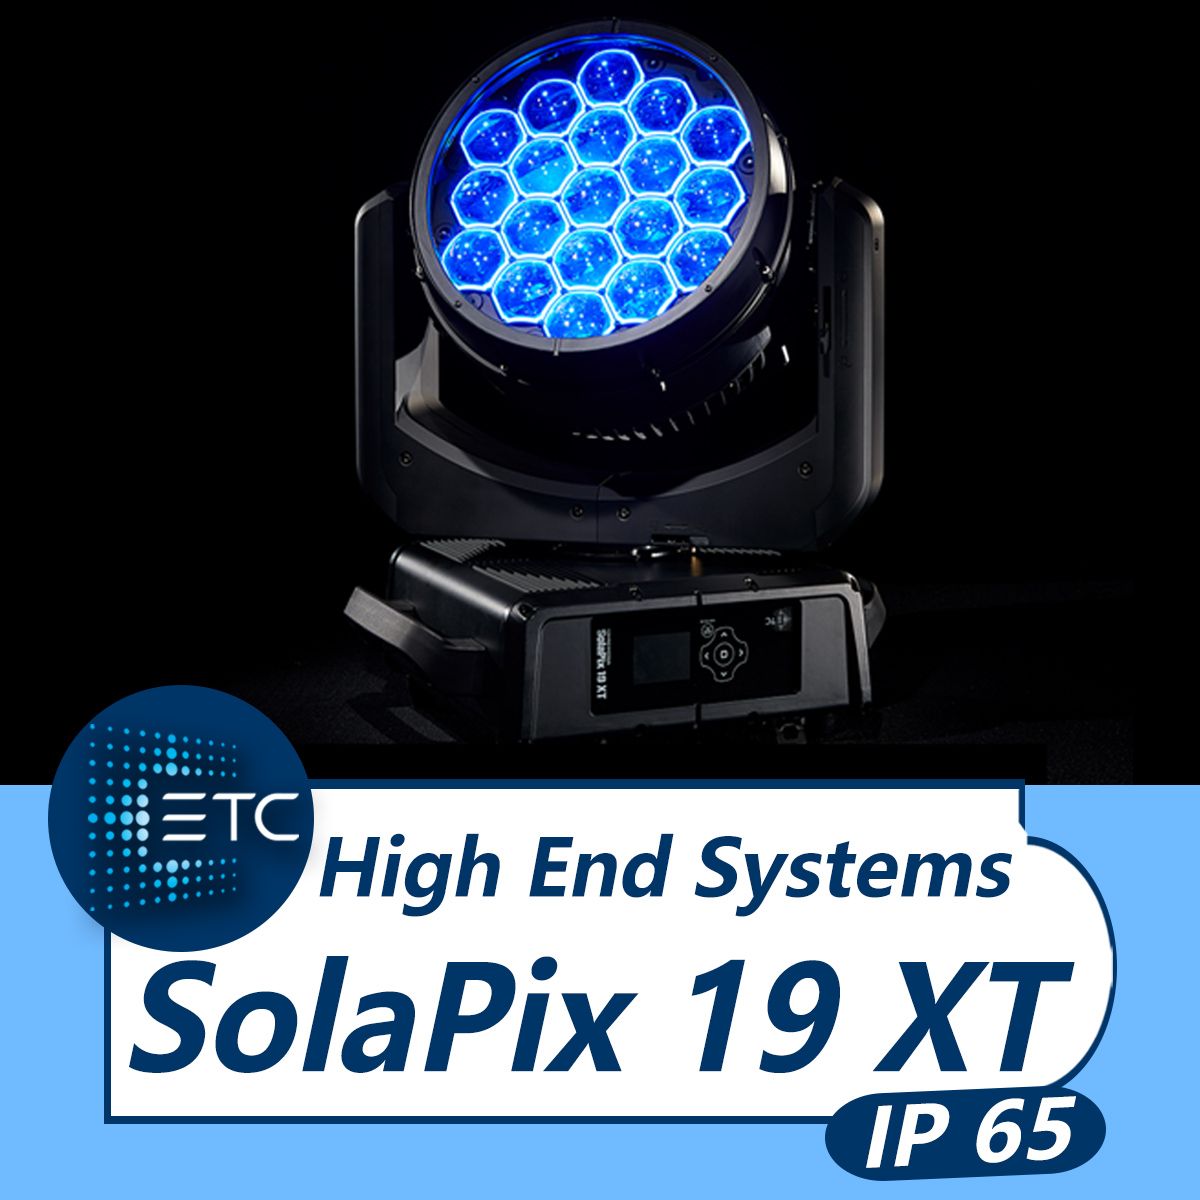 High End Systems SolaPix 19 XT